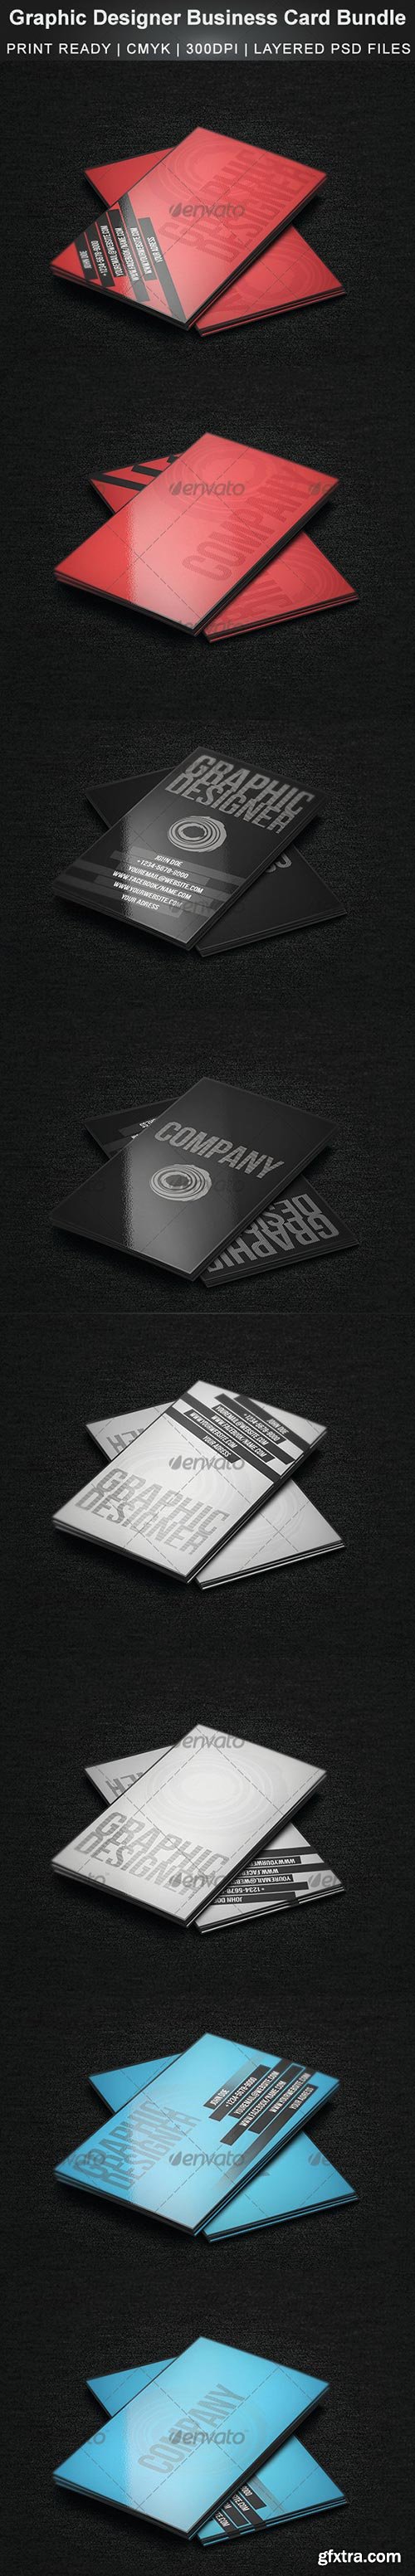 GraphicRiver - Graphic Designer Business Card Bundle